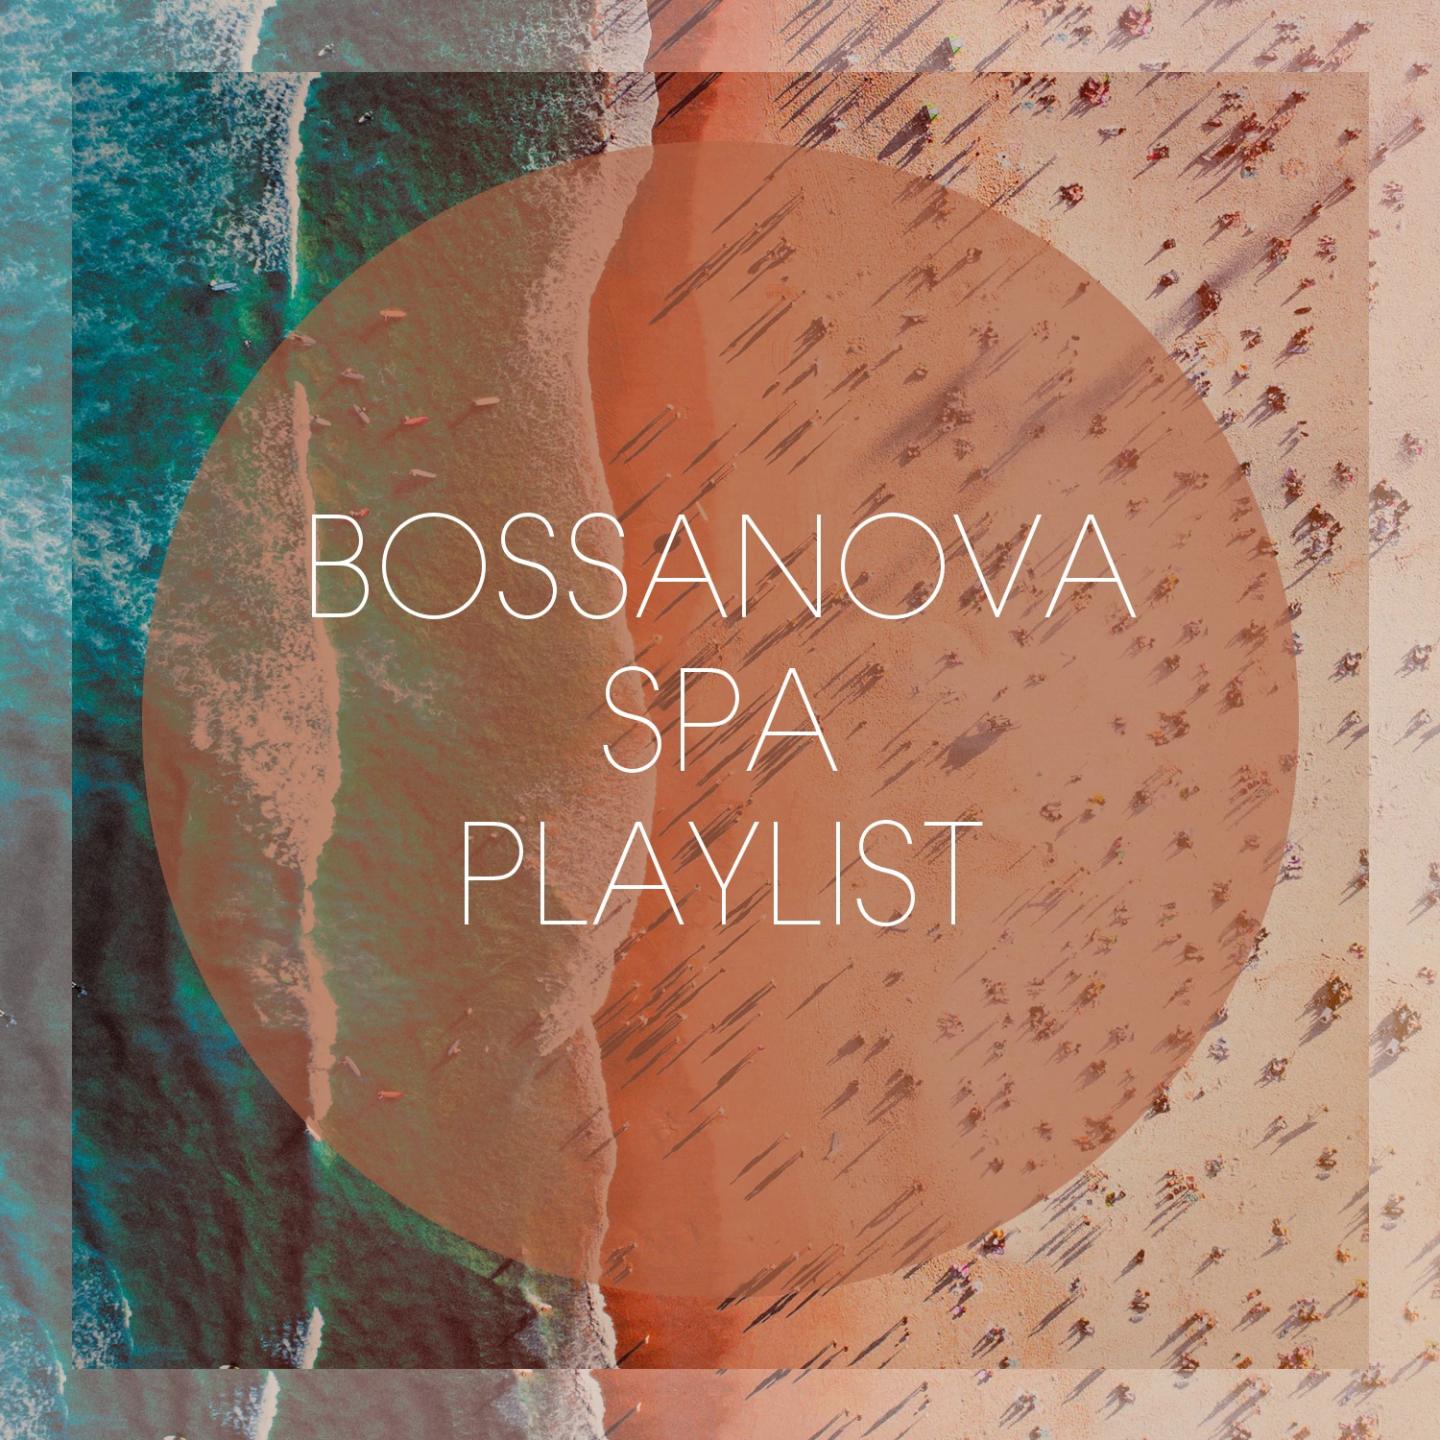 Bossanova Spa Playlist